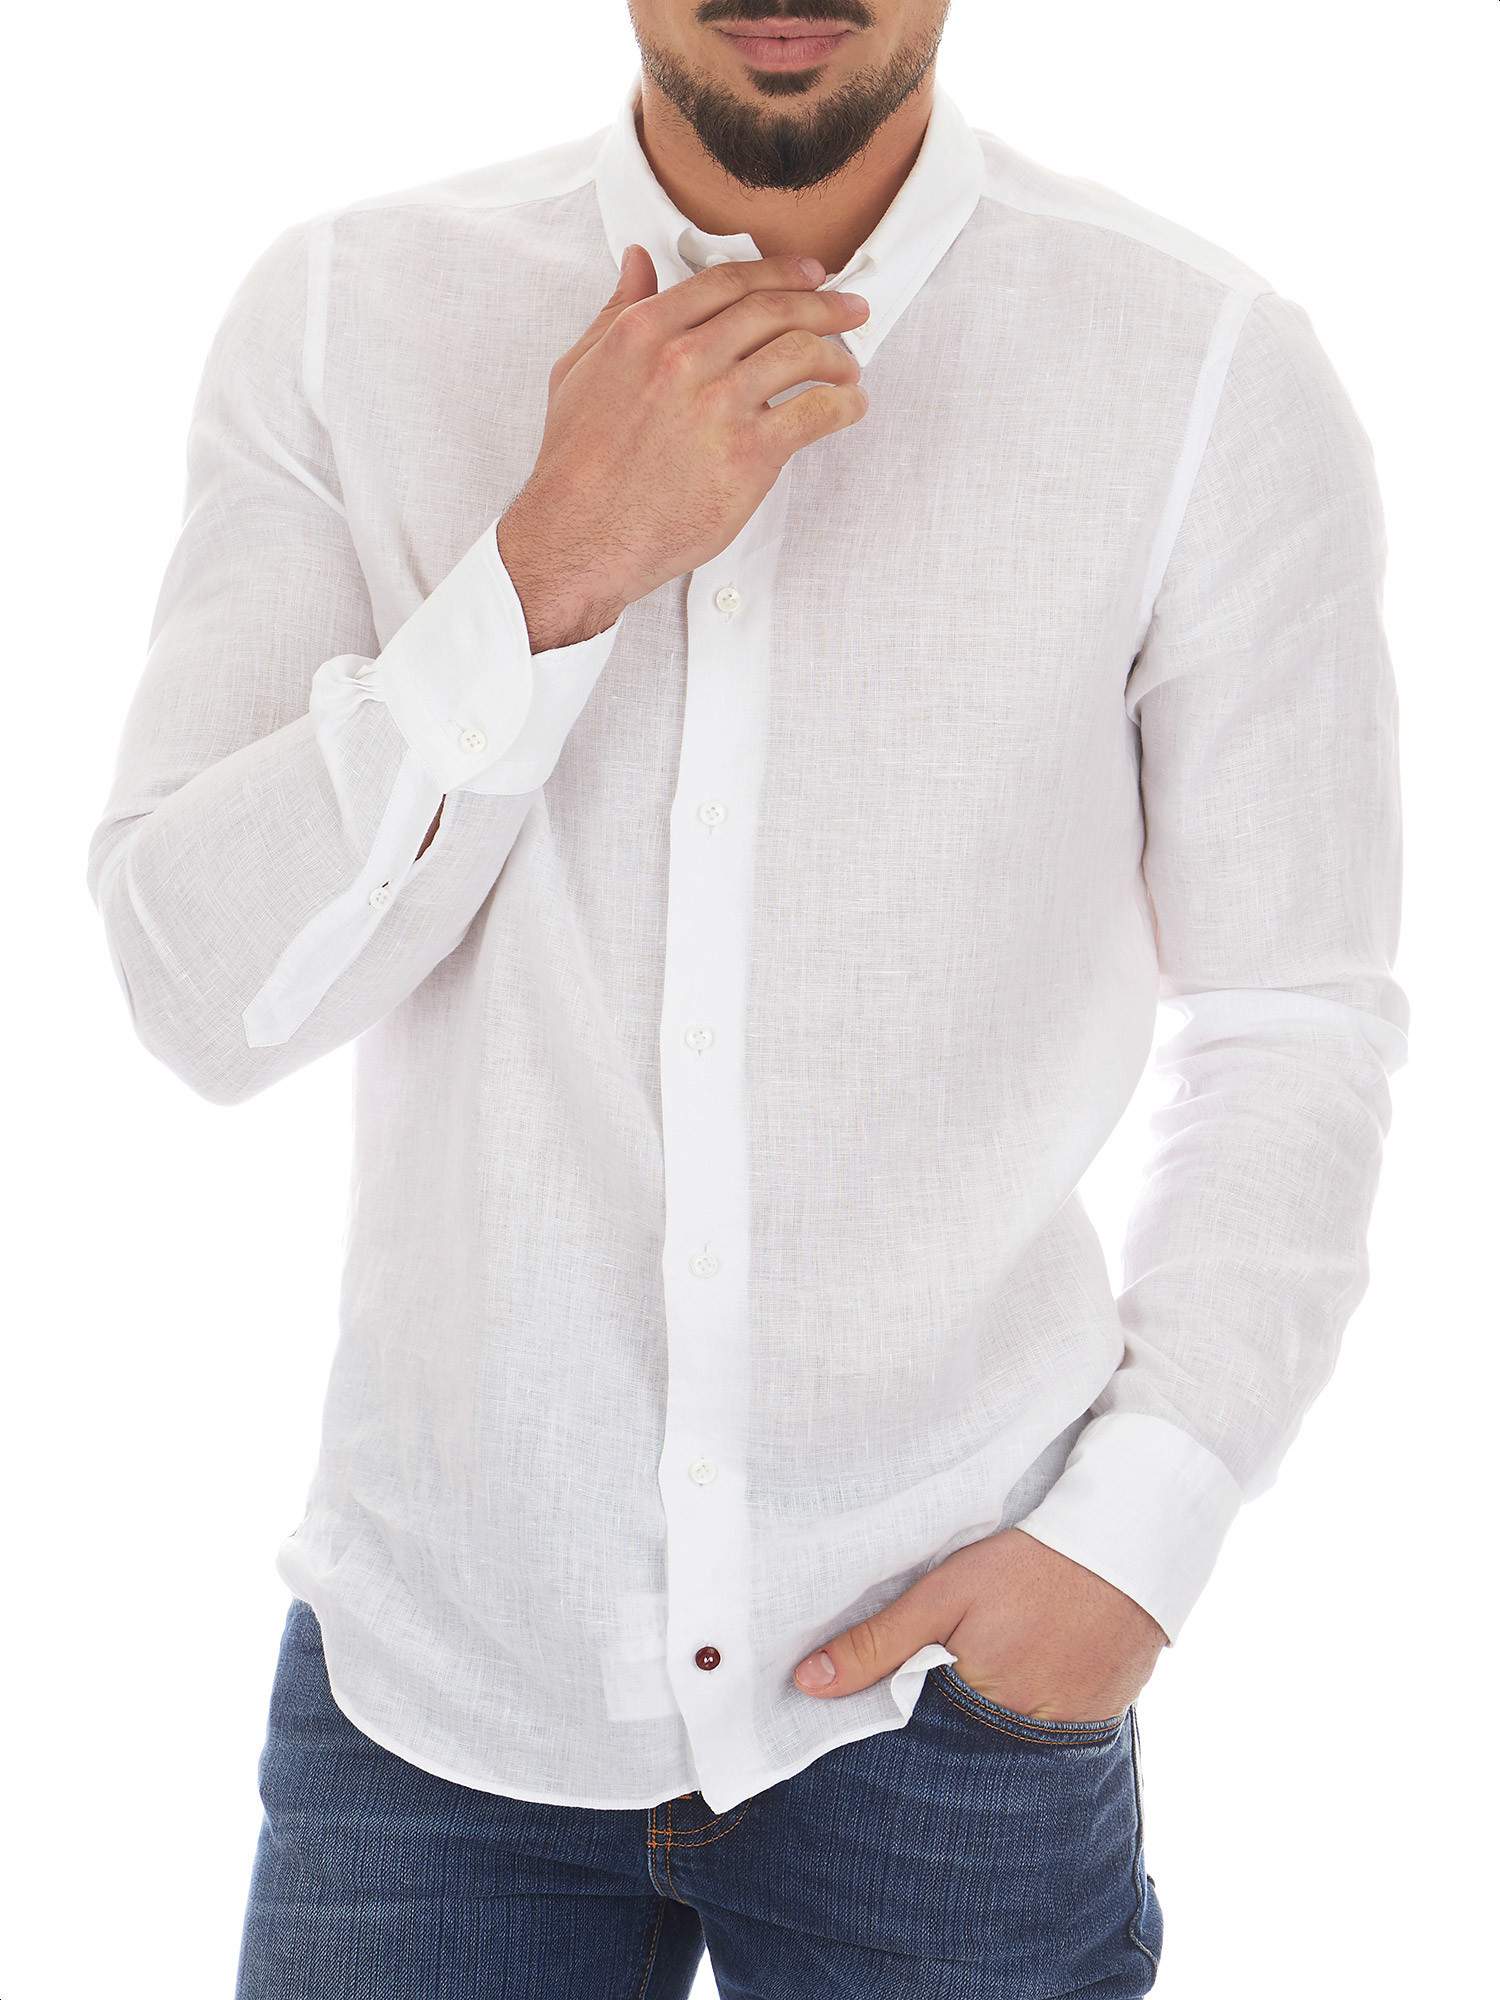 Càrrel - White linen shirt with button down collar